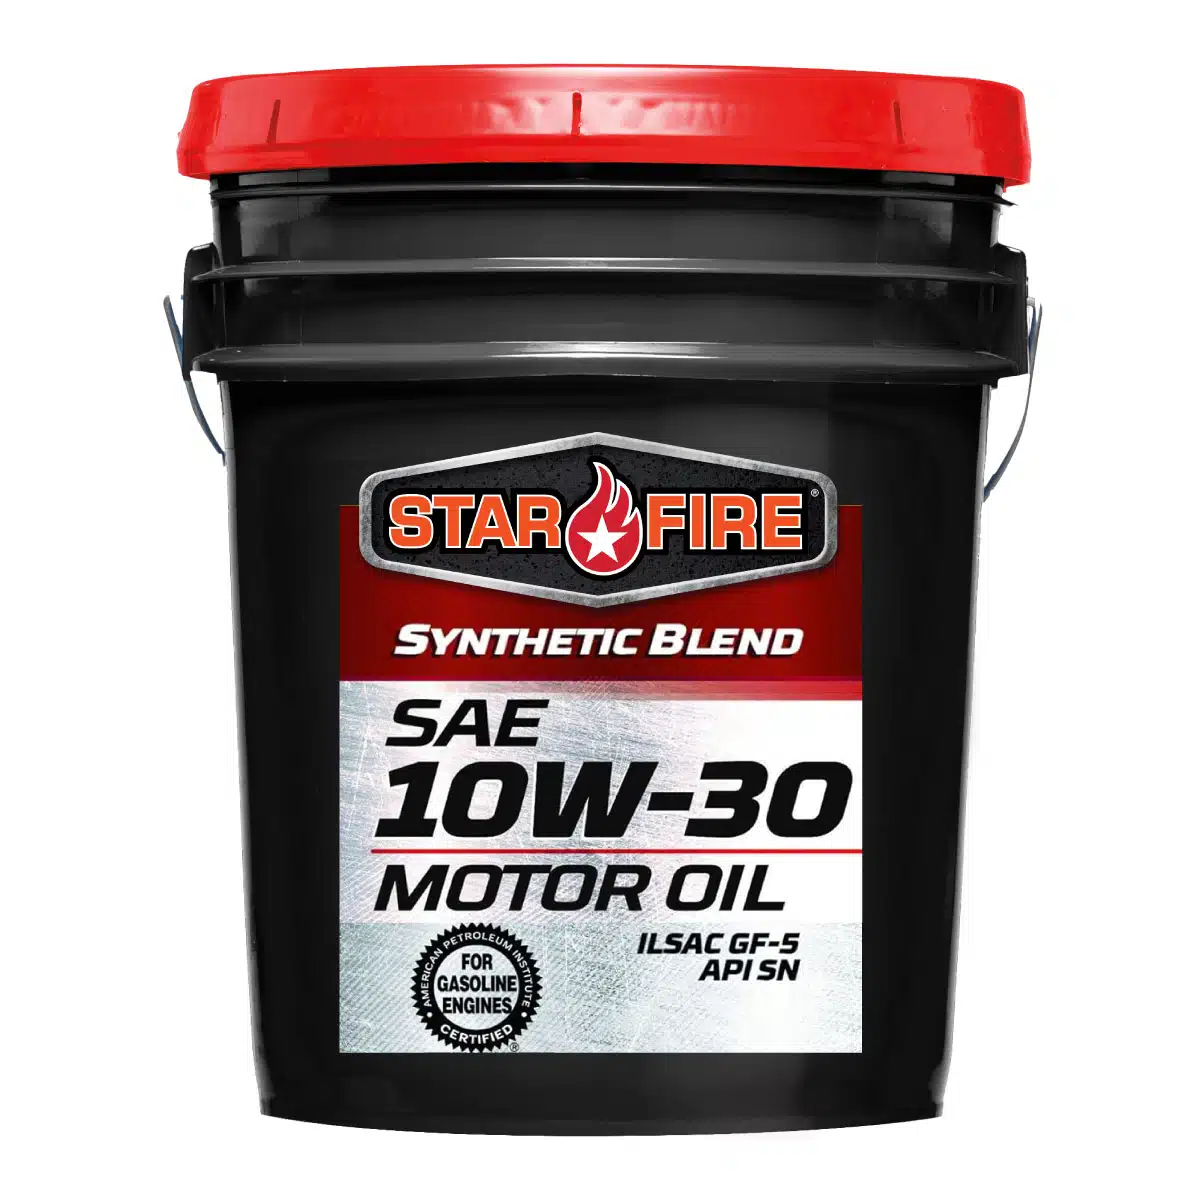 Synthetic Blend Motor Oil 10W-30 5 Gallon